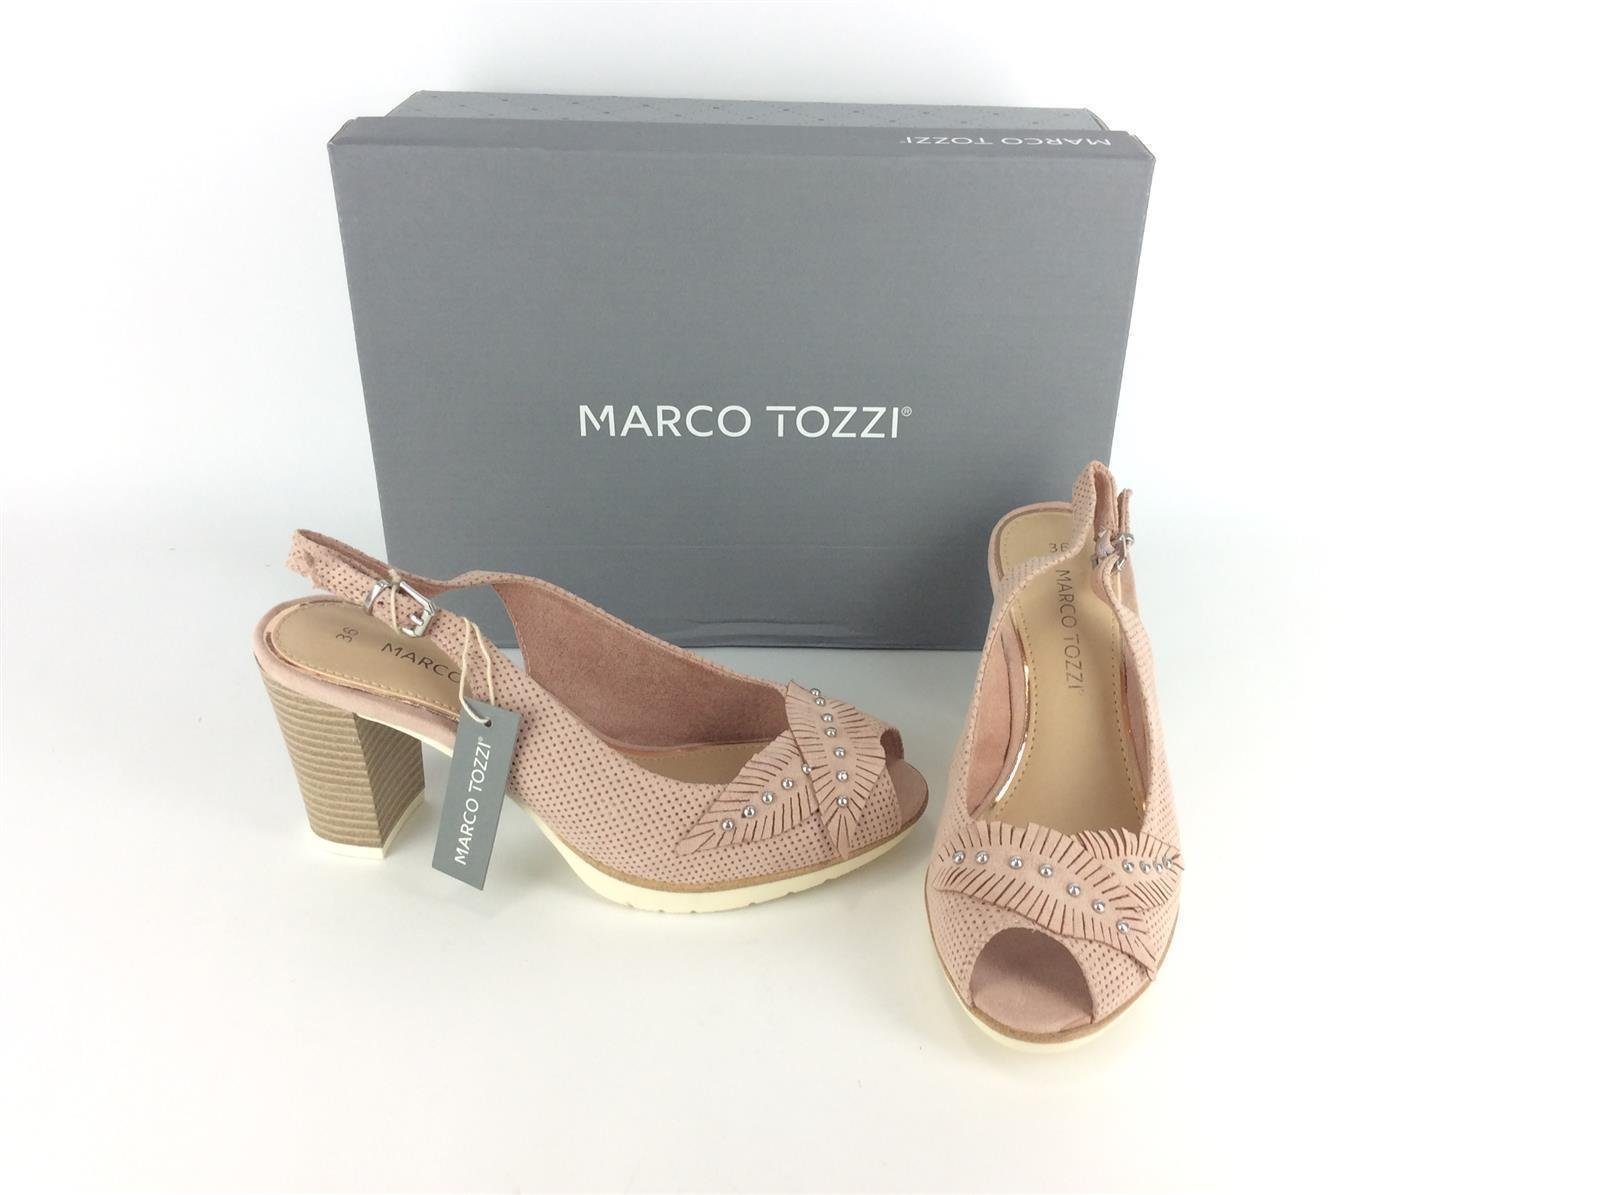 MARCO TOZZI Marco Tozzi Sling Sandale Rose,6 cm Absatz Босоножки